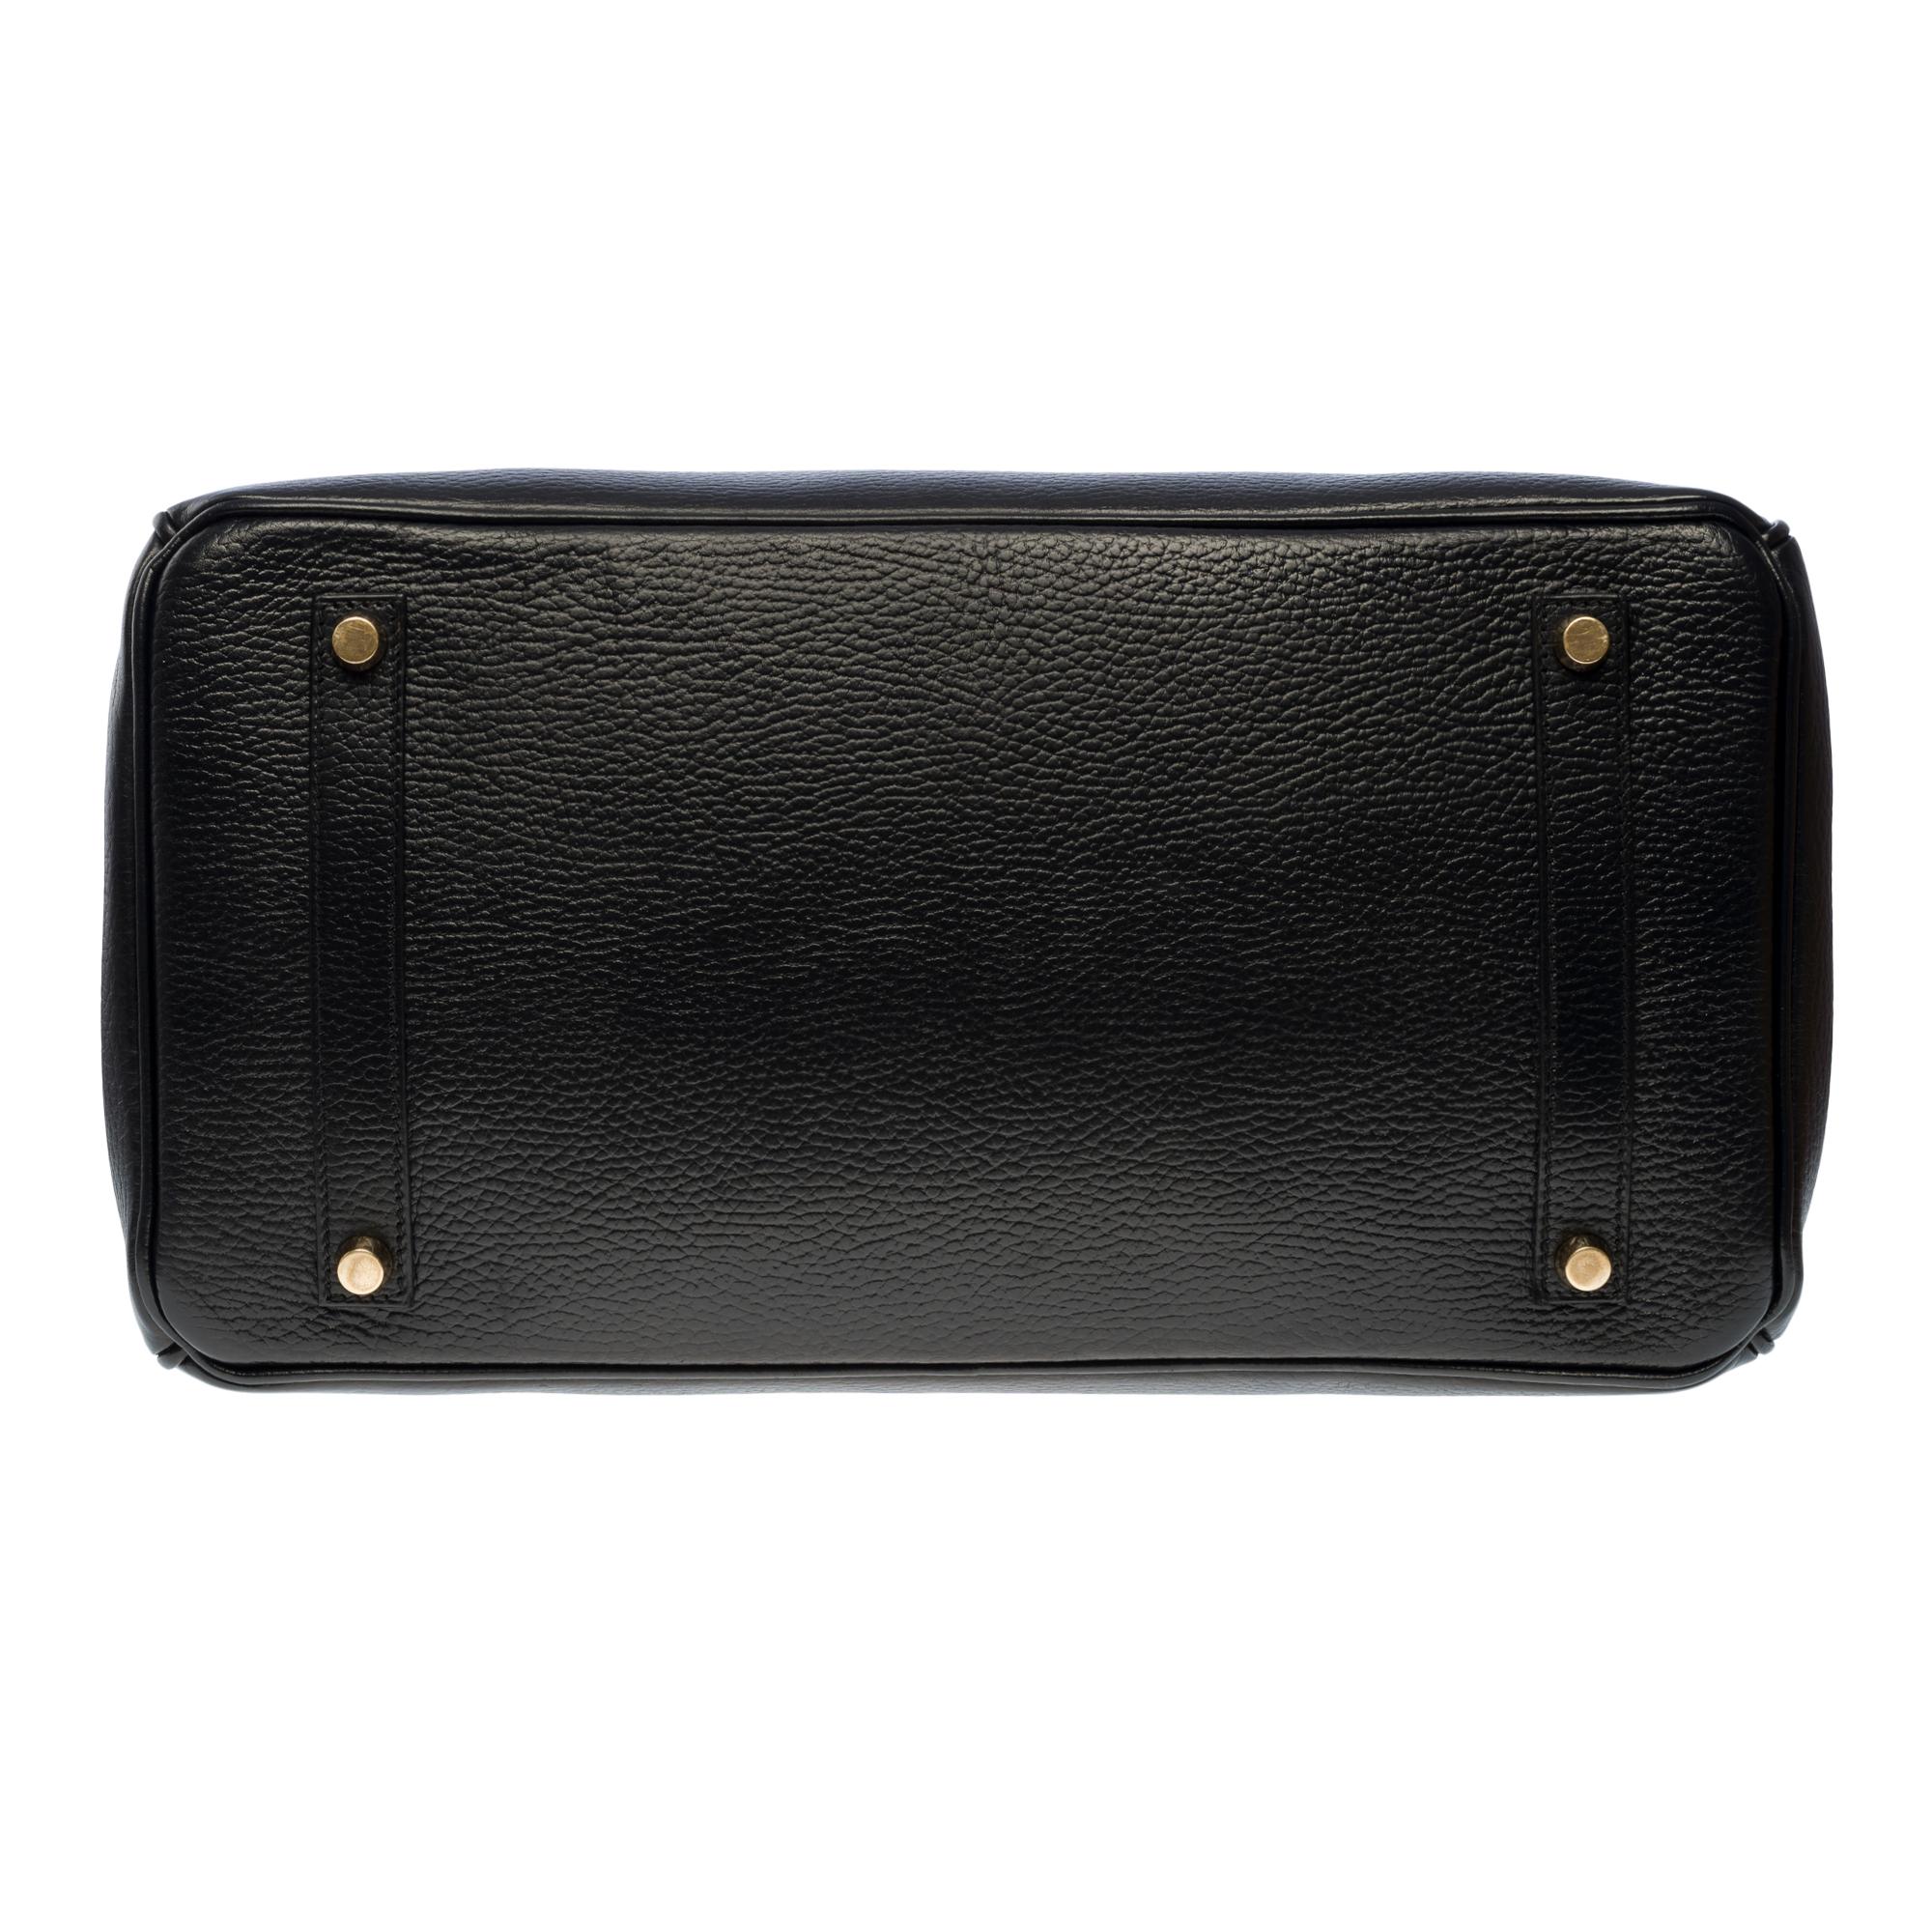 Amazing Hermès Birkin 35 handbag in black Togo leather, GHW 6